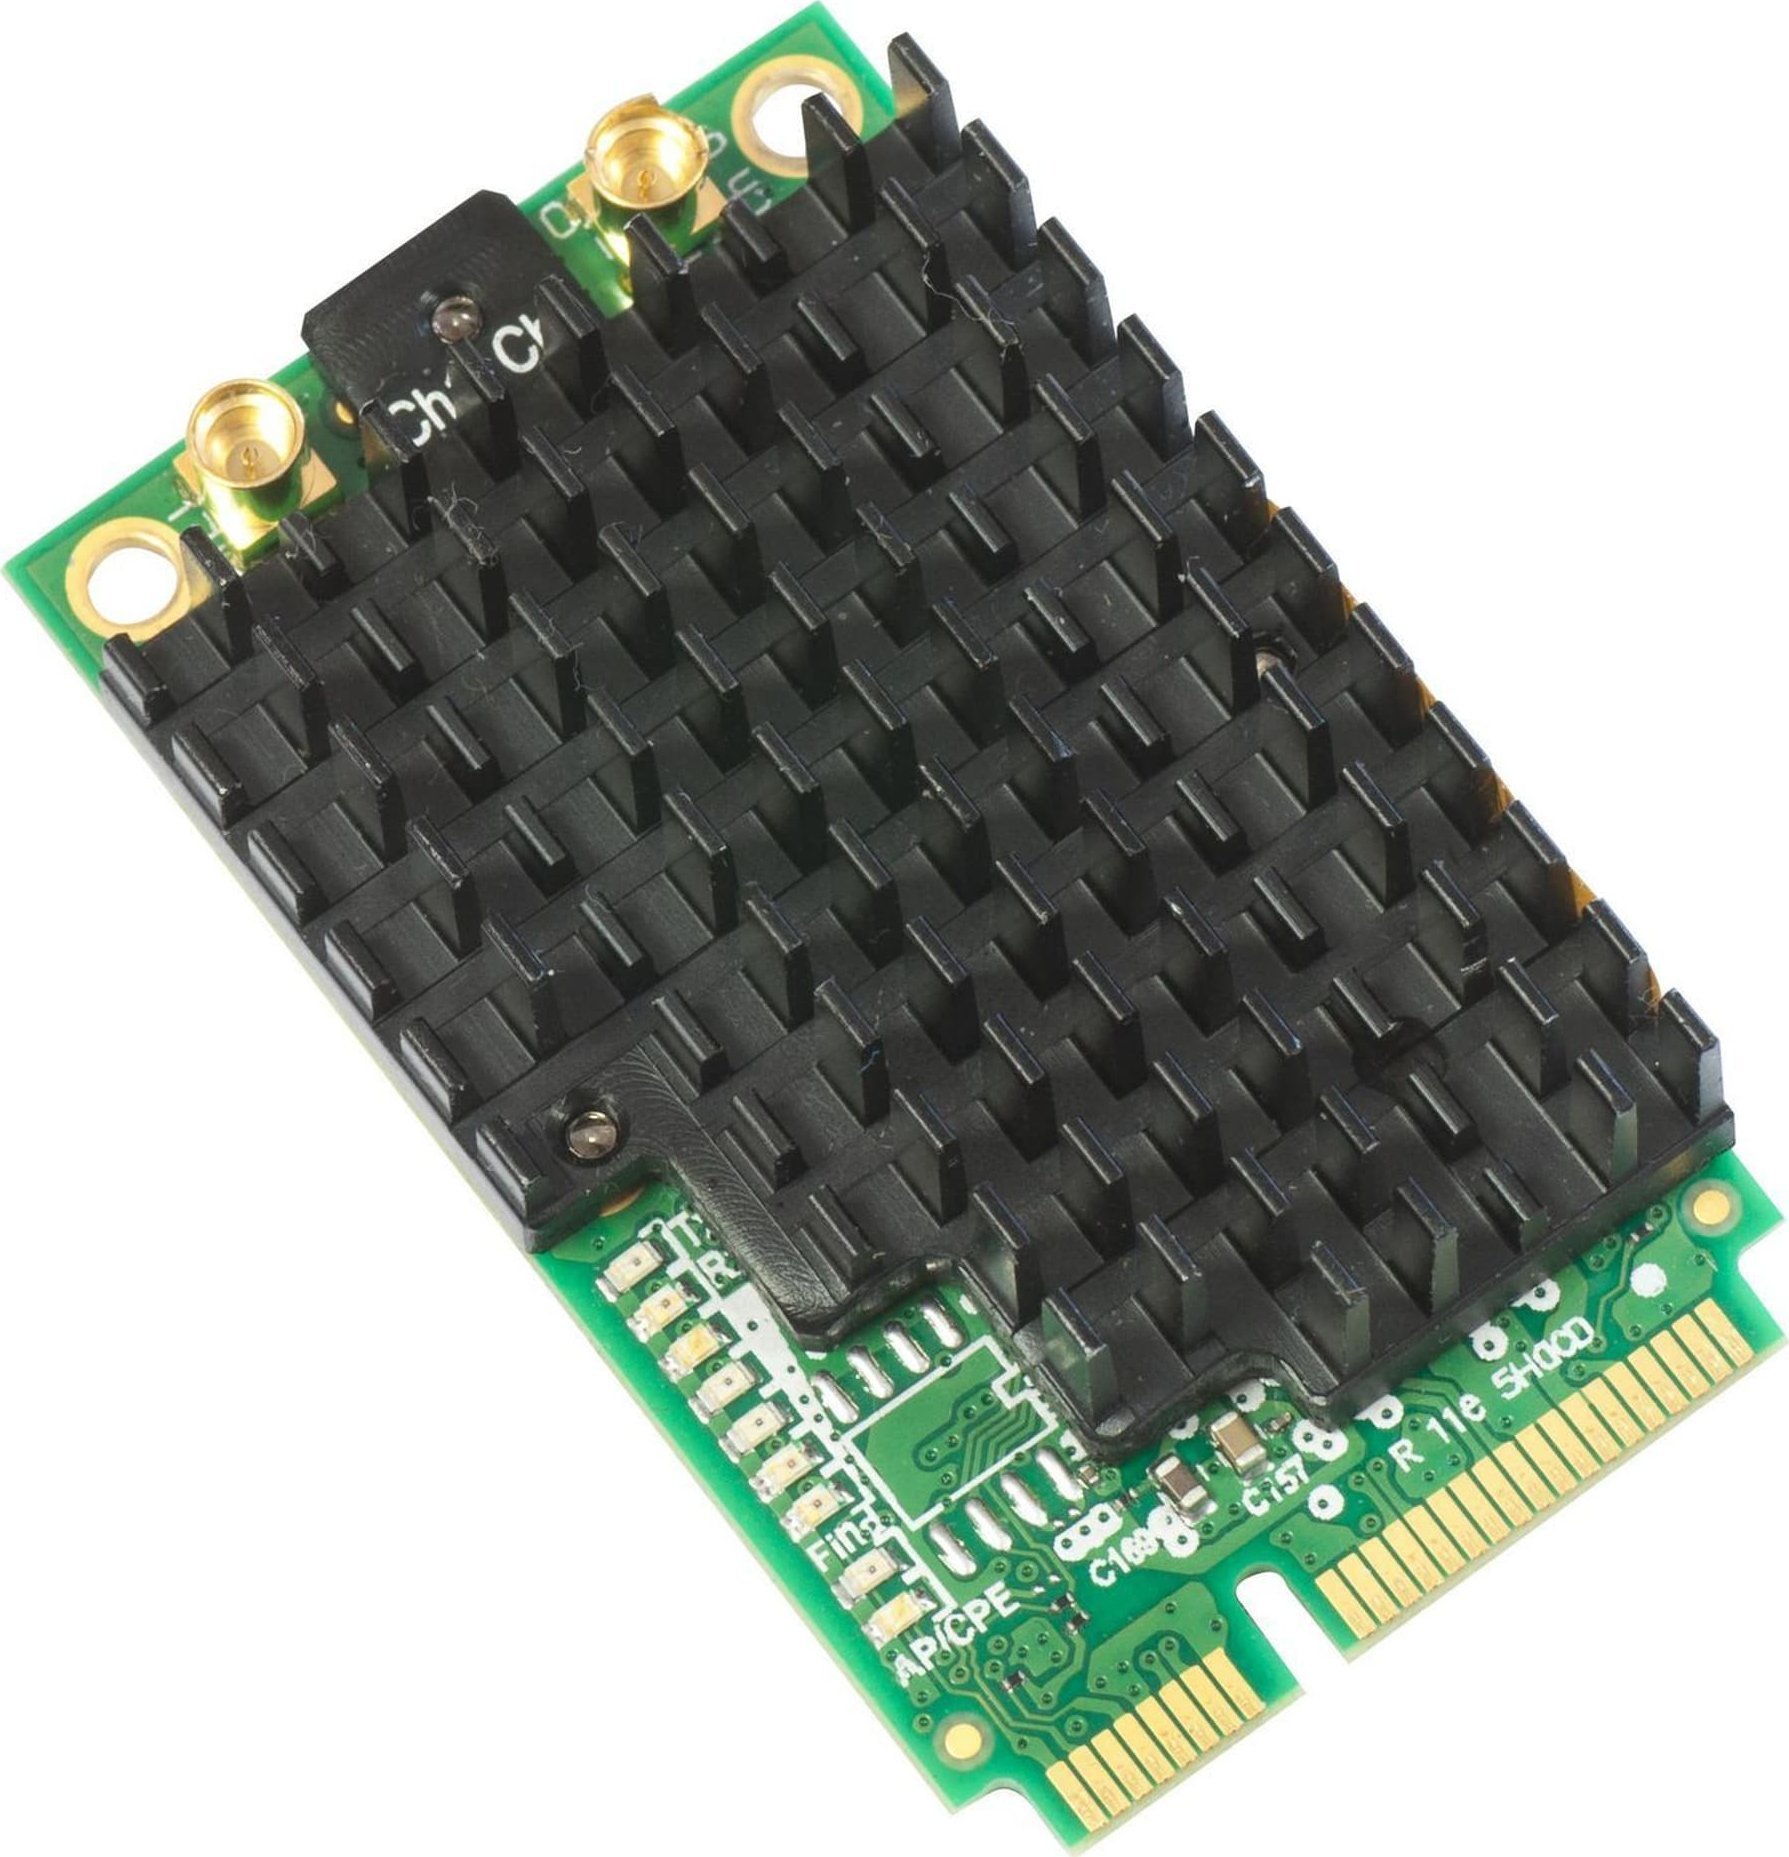 MikroTik MIKROTIK R11E-5HACD 802.11AC MINI PCI EXPRESS CARD DUAL CHAIN, 5GHZ, 27DBM